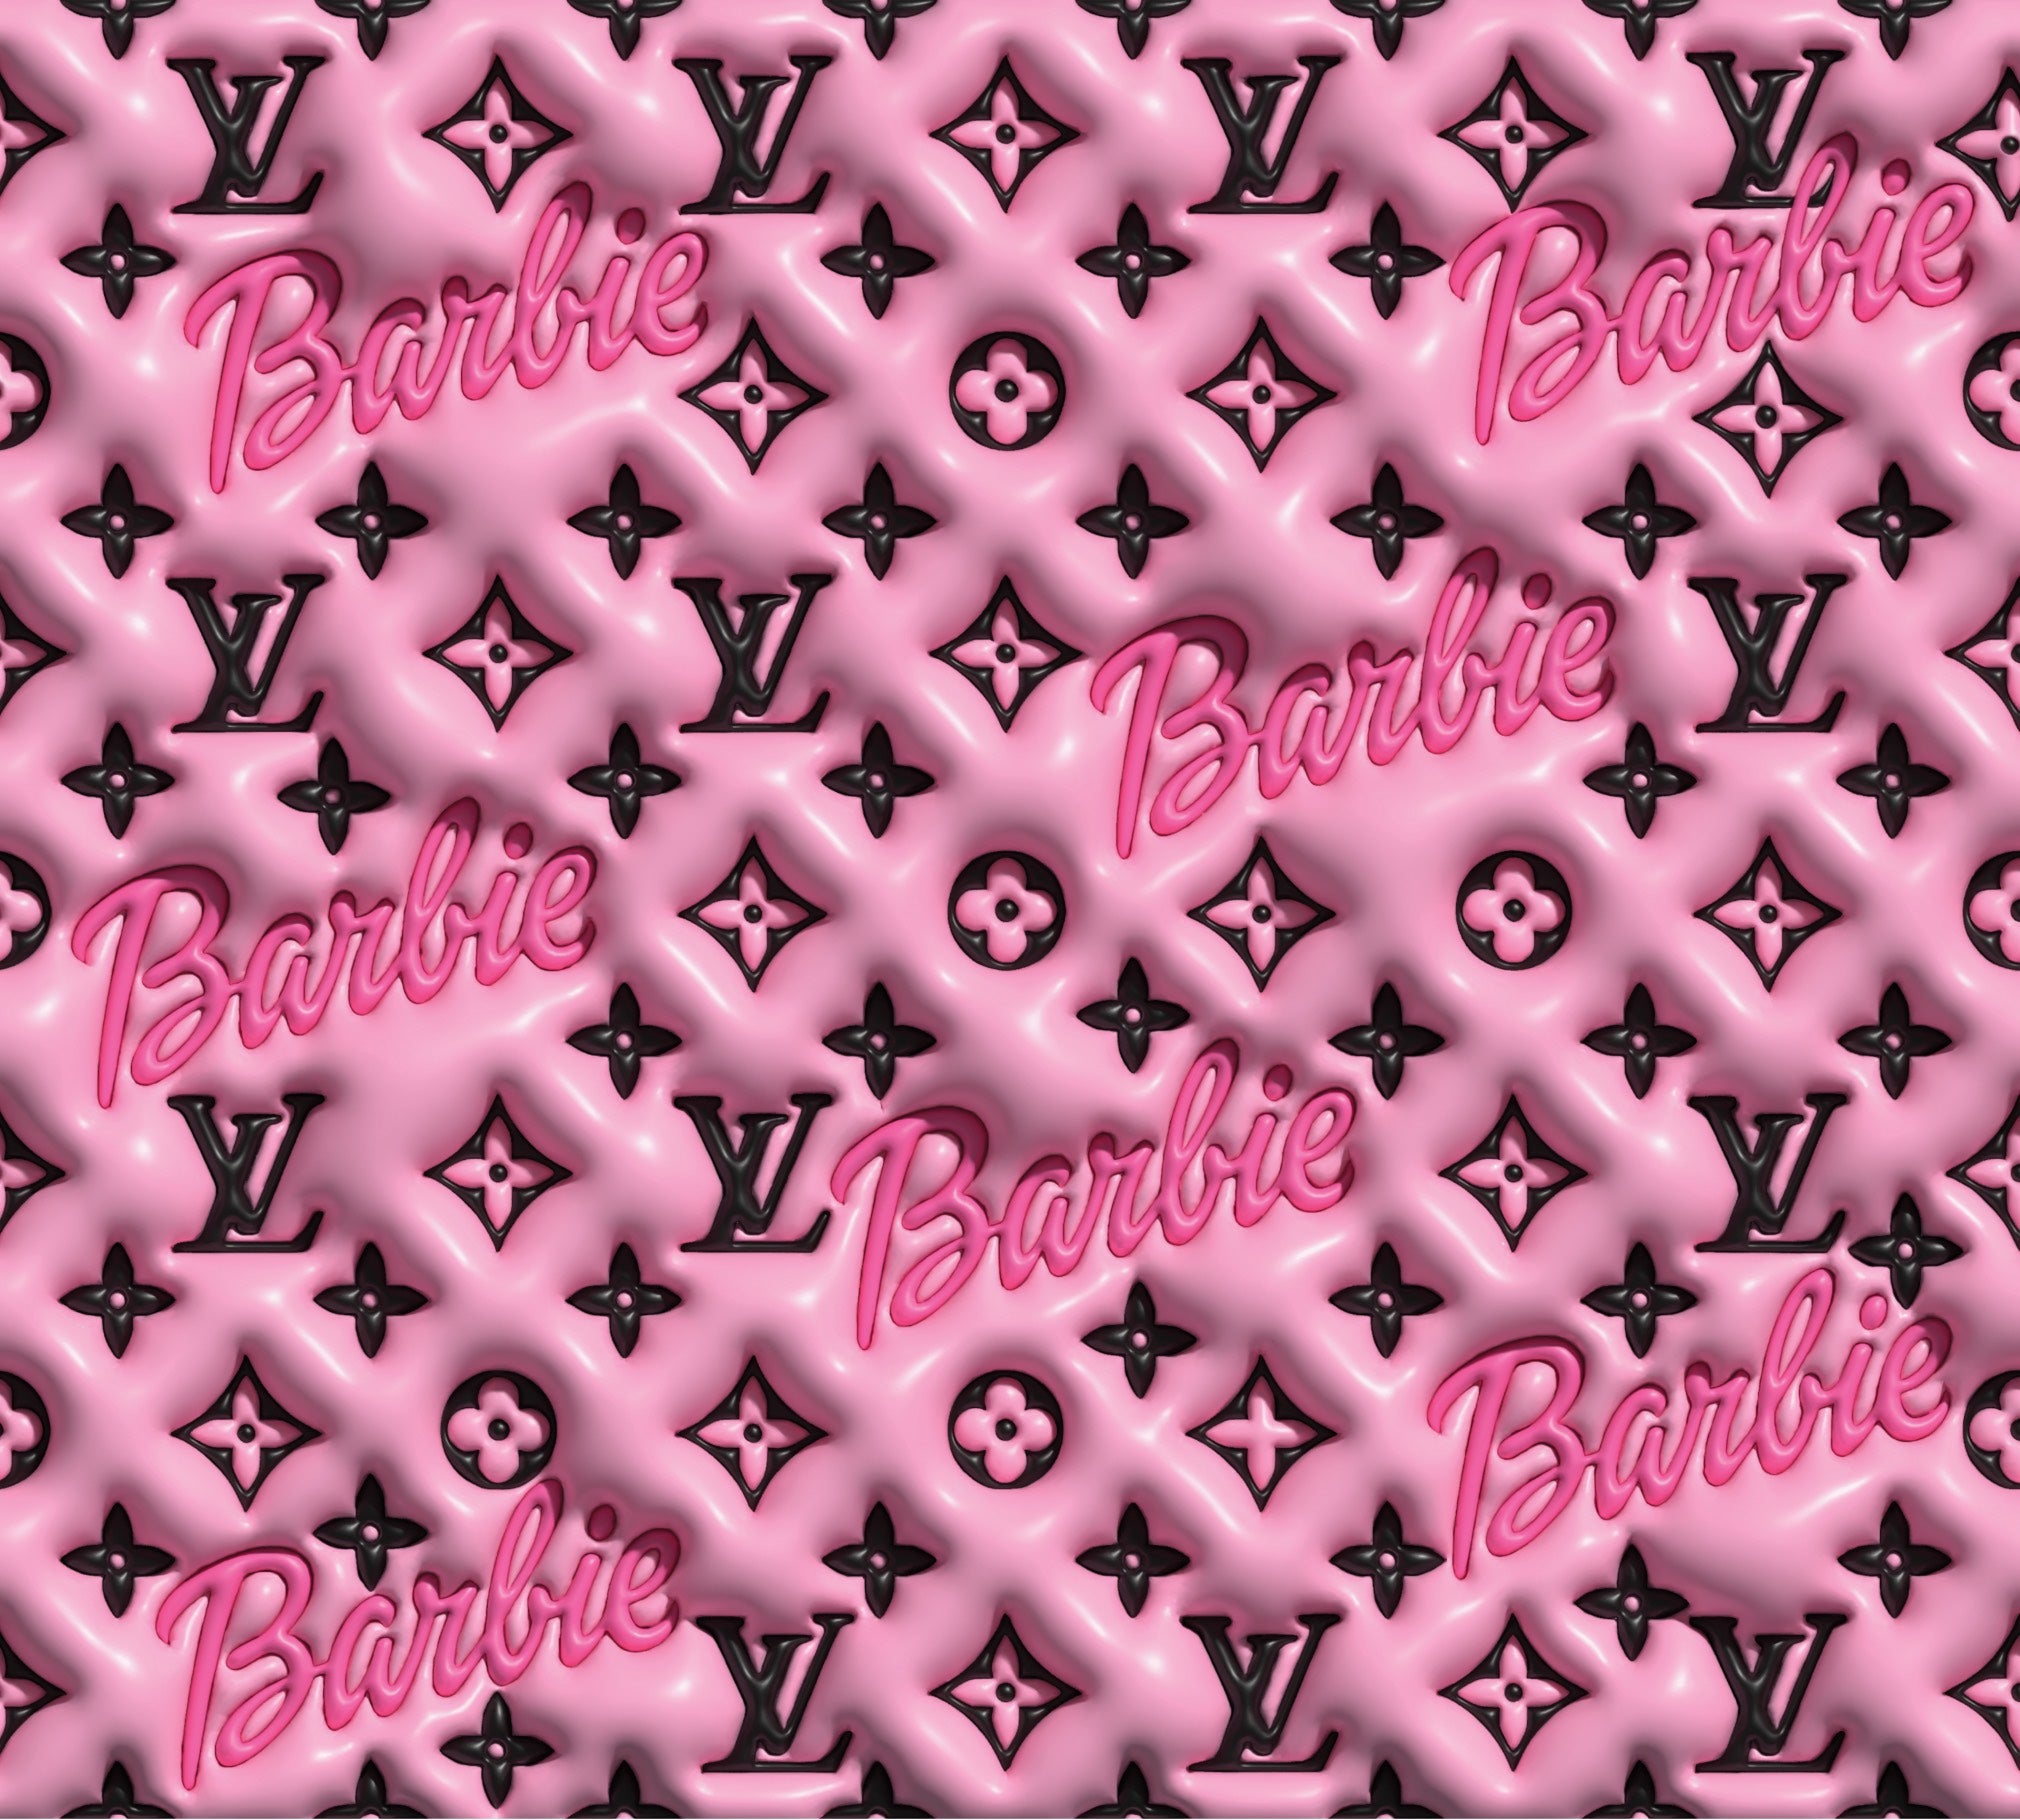 barbie louis vuitton logo